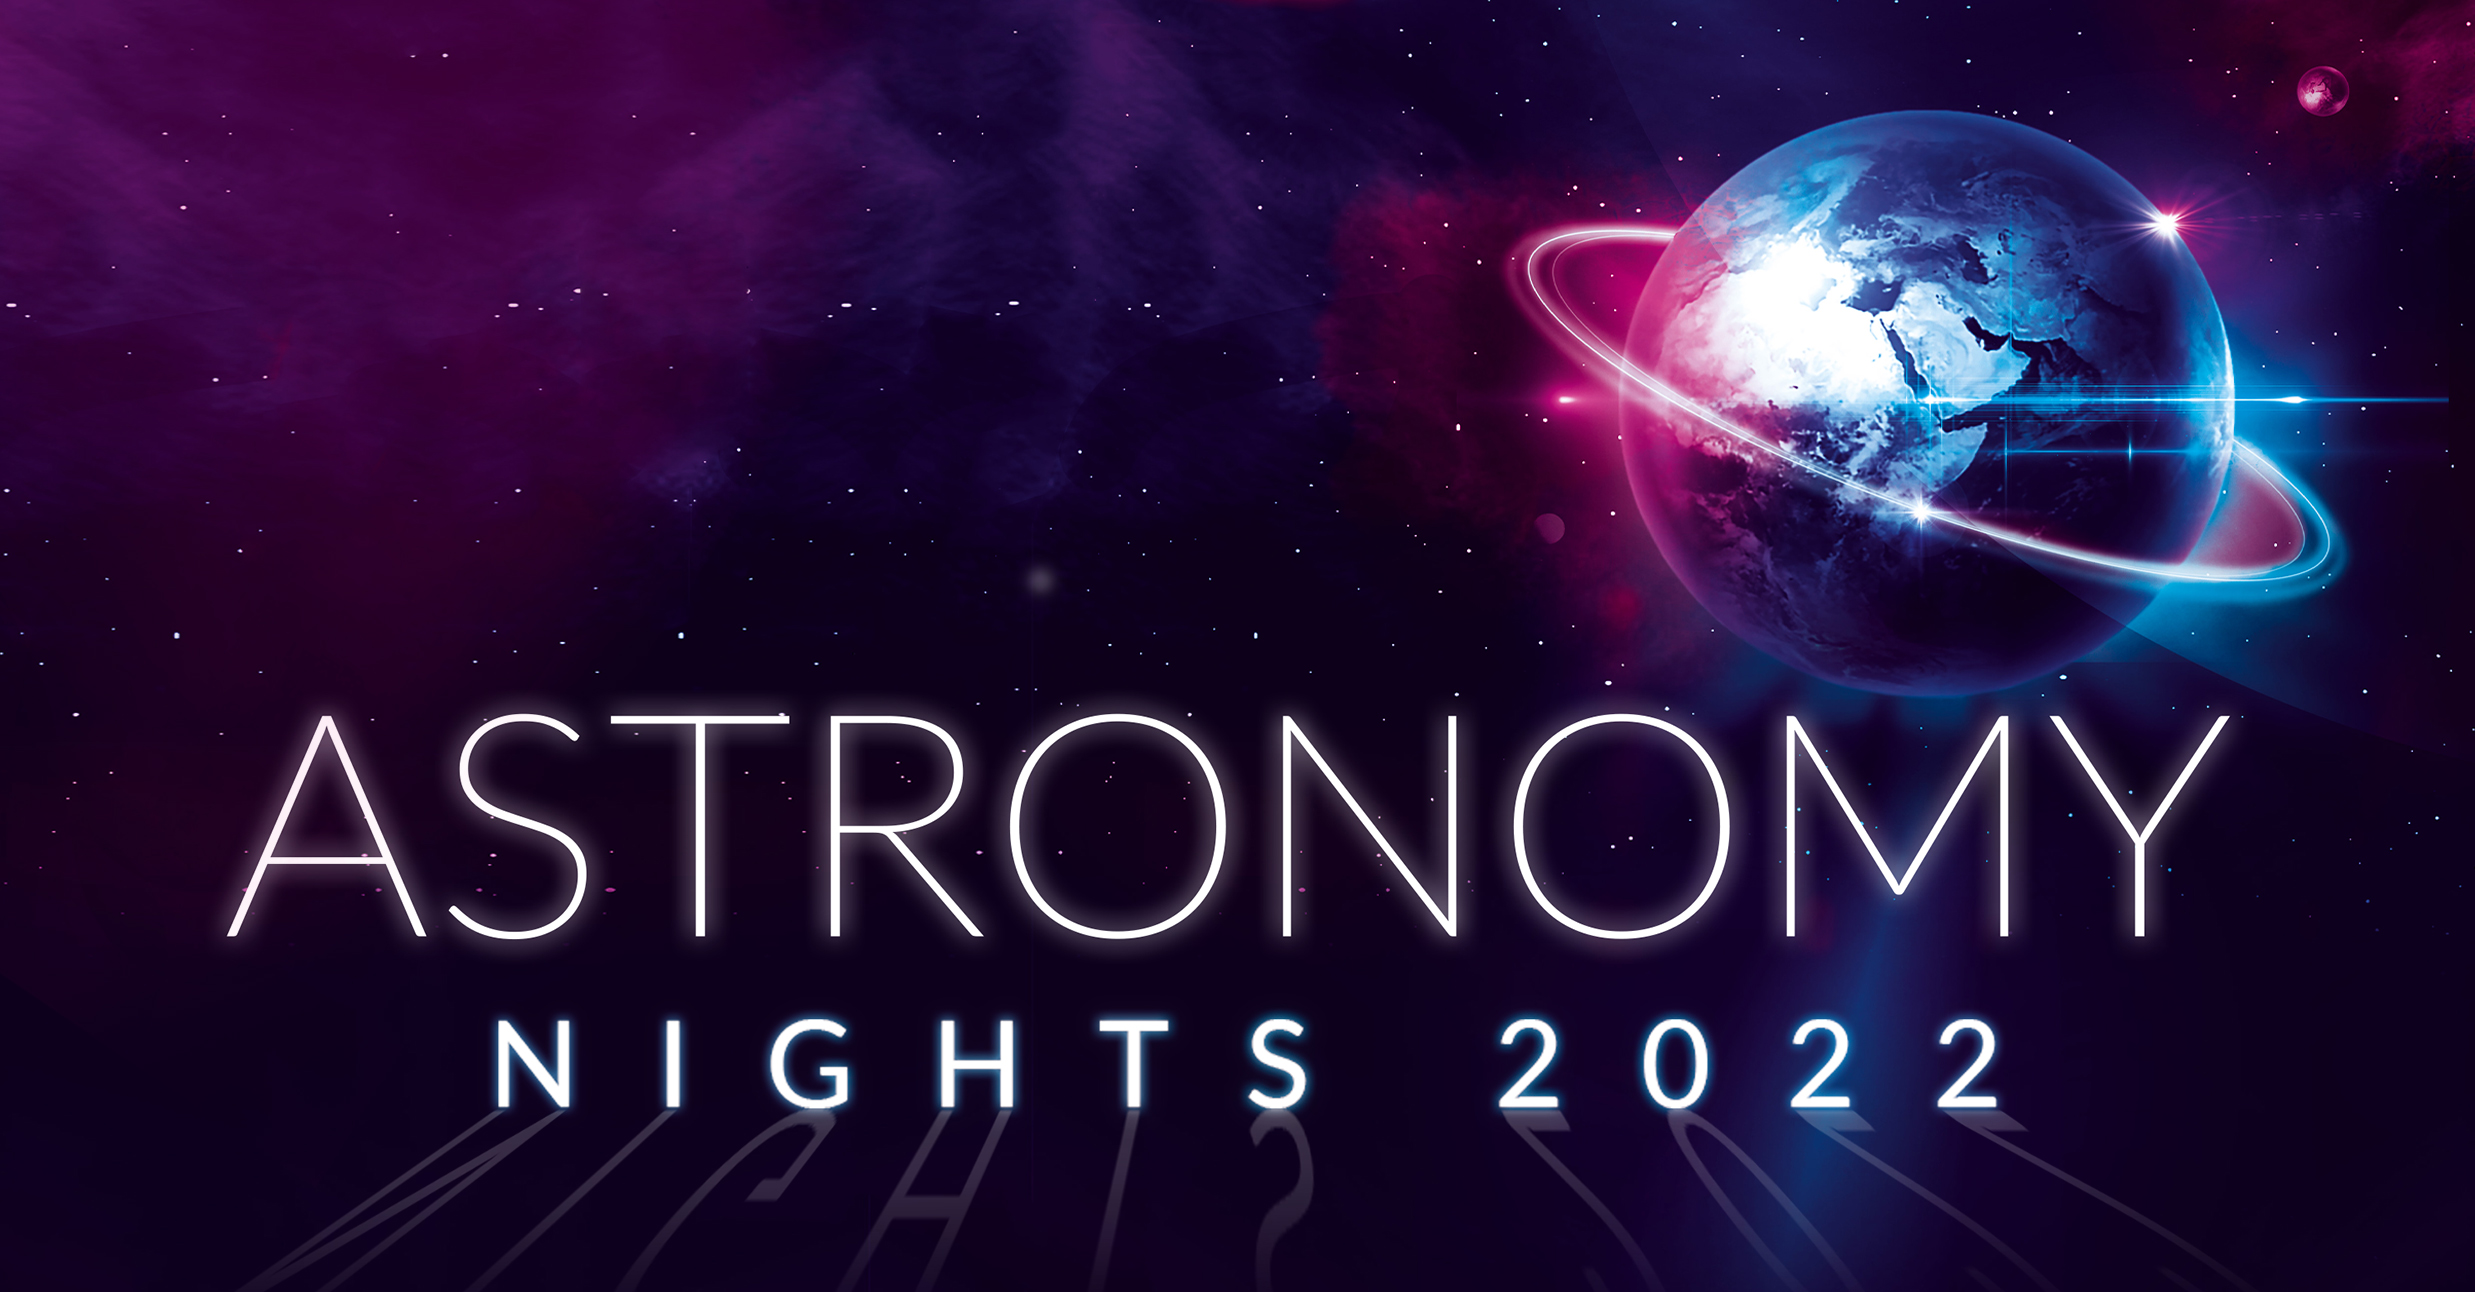 Astronomy Nights 2022